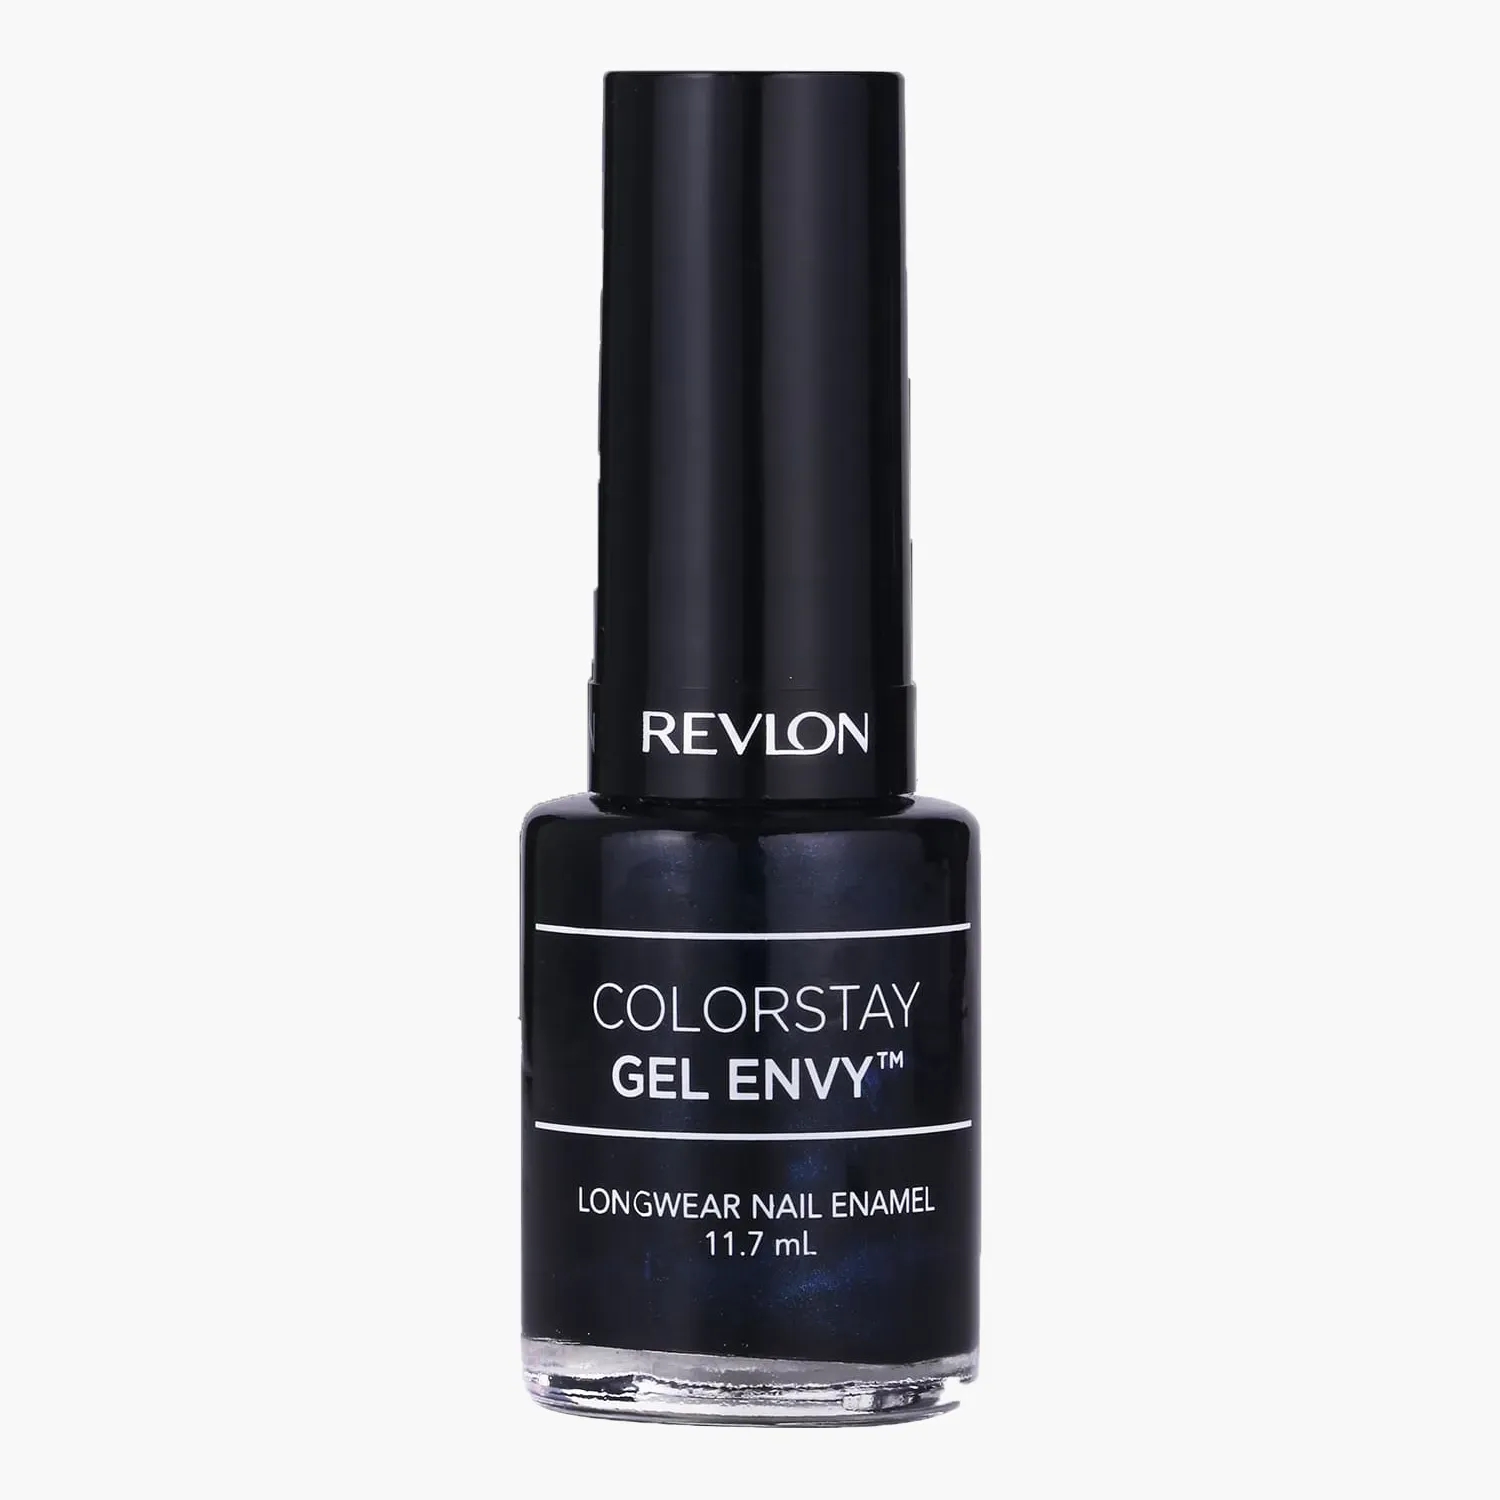 Revlon Colorstay Gel Envy Longwear Nail Enamel Nail Polish Choose Shade |  eBay